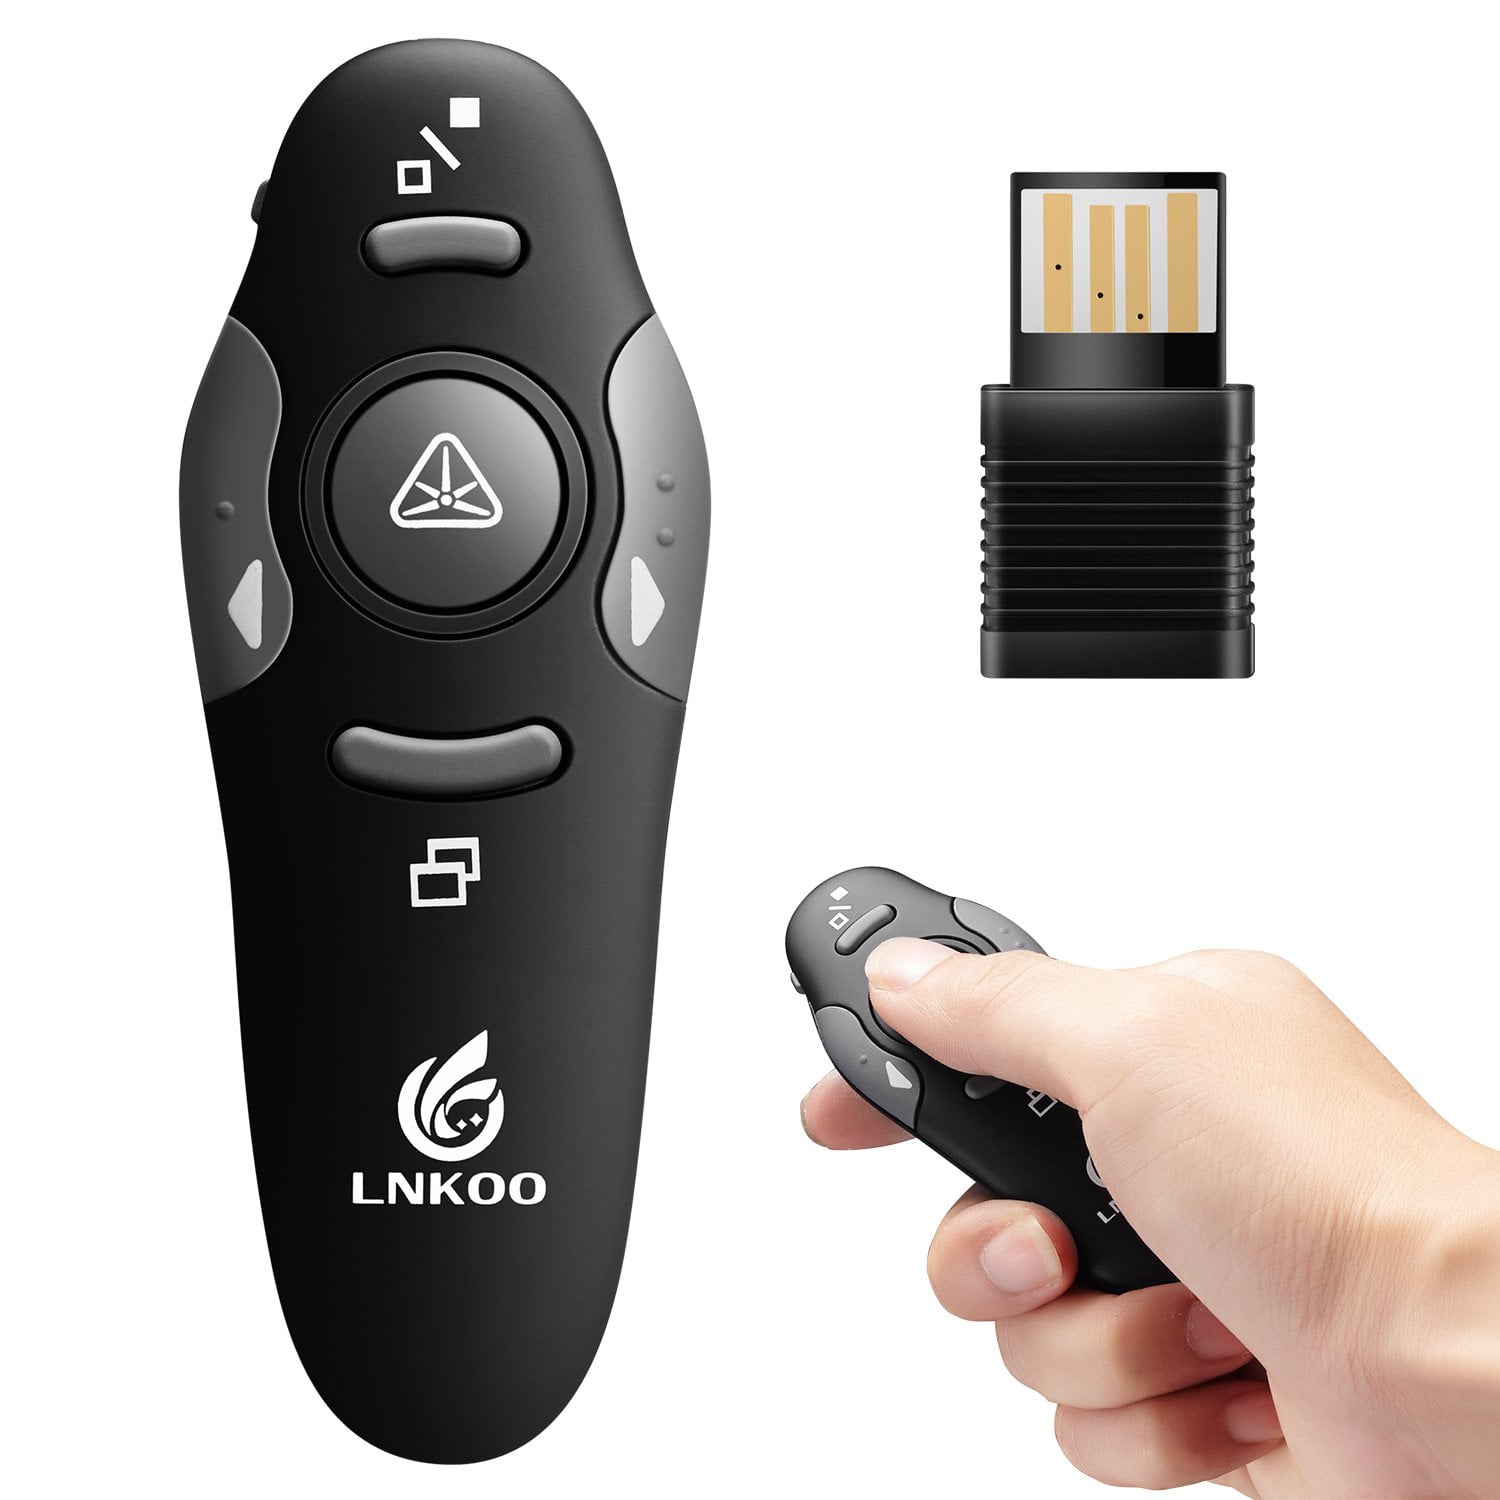 LNKOO 2.4 GHz Wireless Presenter Remote Presentation USB Control 